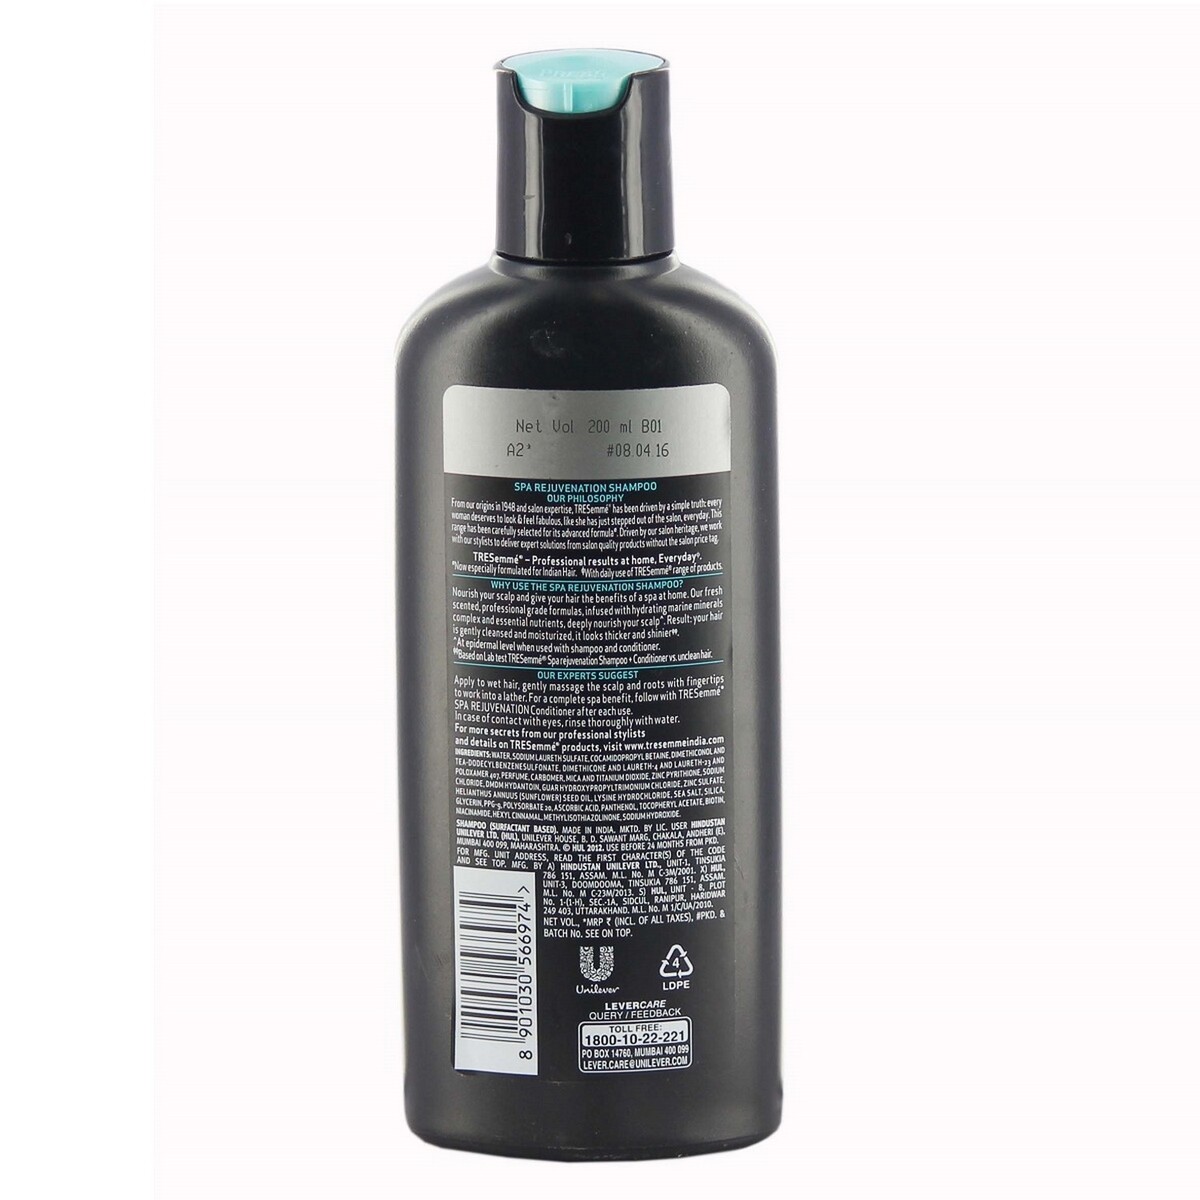 TRESemme Shampoo Hair Spa Rejuvenation 200ml